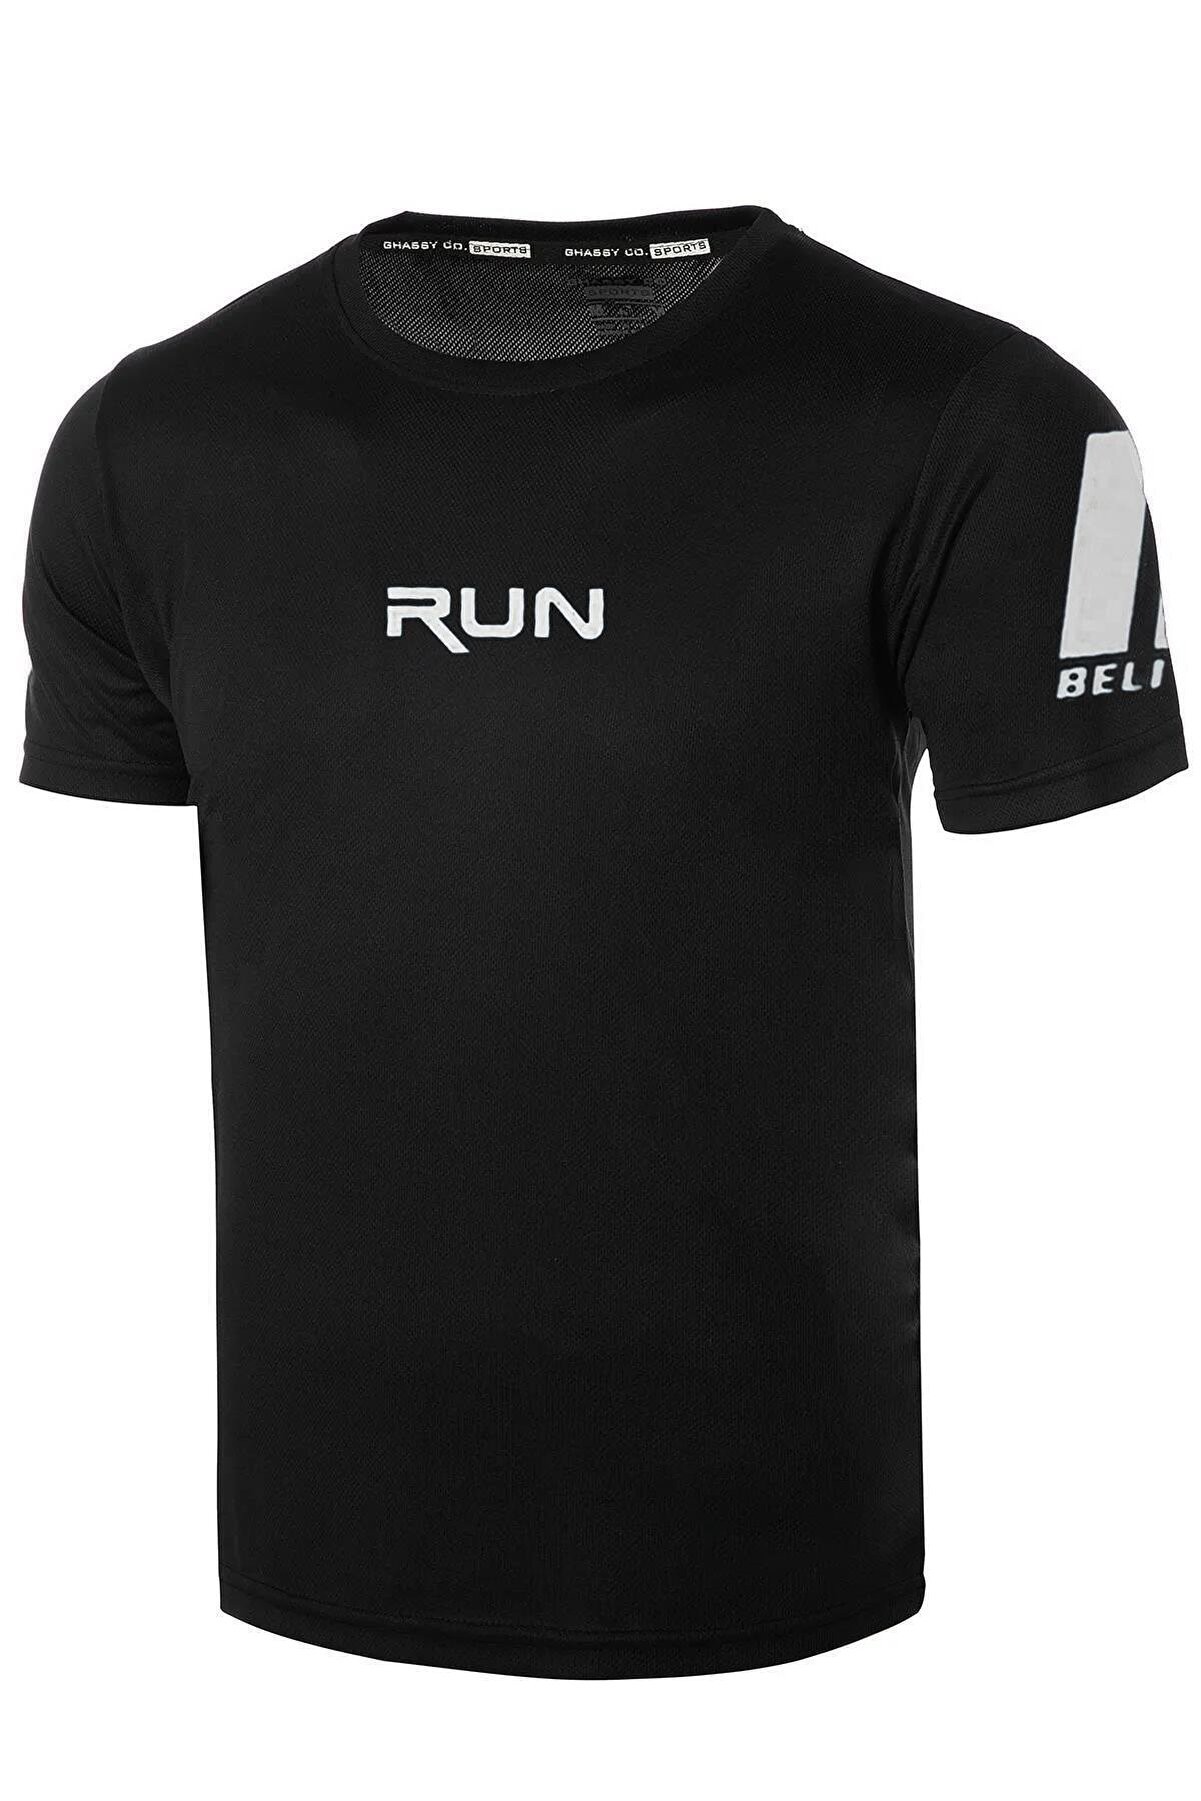 Ghassy Co Ghassy Co. Erkek Nem Emici Hızlı Kuruma Performans Running Spor T-shirt